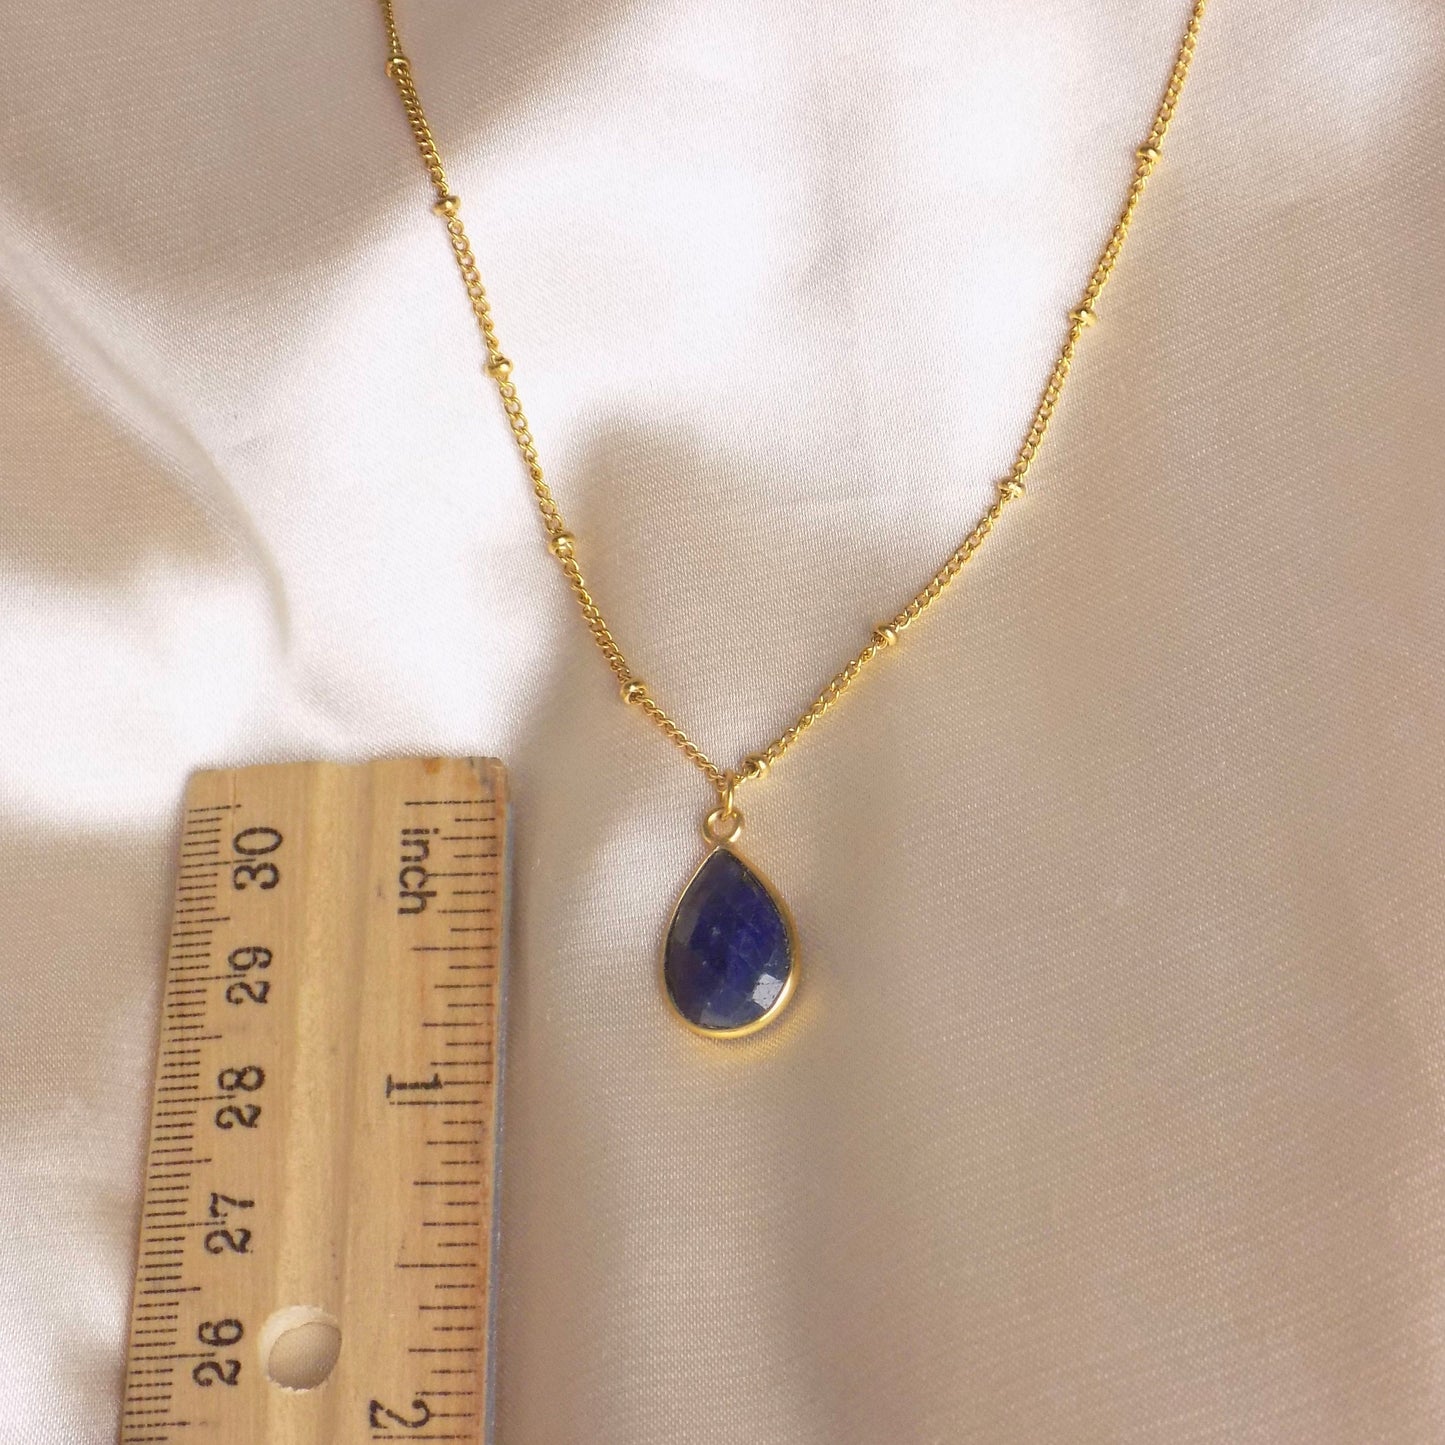 Blue Sapphire Necklace Satellite Chain 18K Gold Stainless Steel, September Birthstone, M7-72